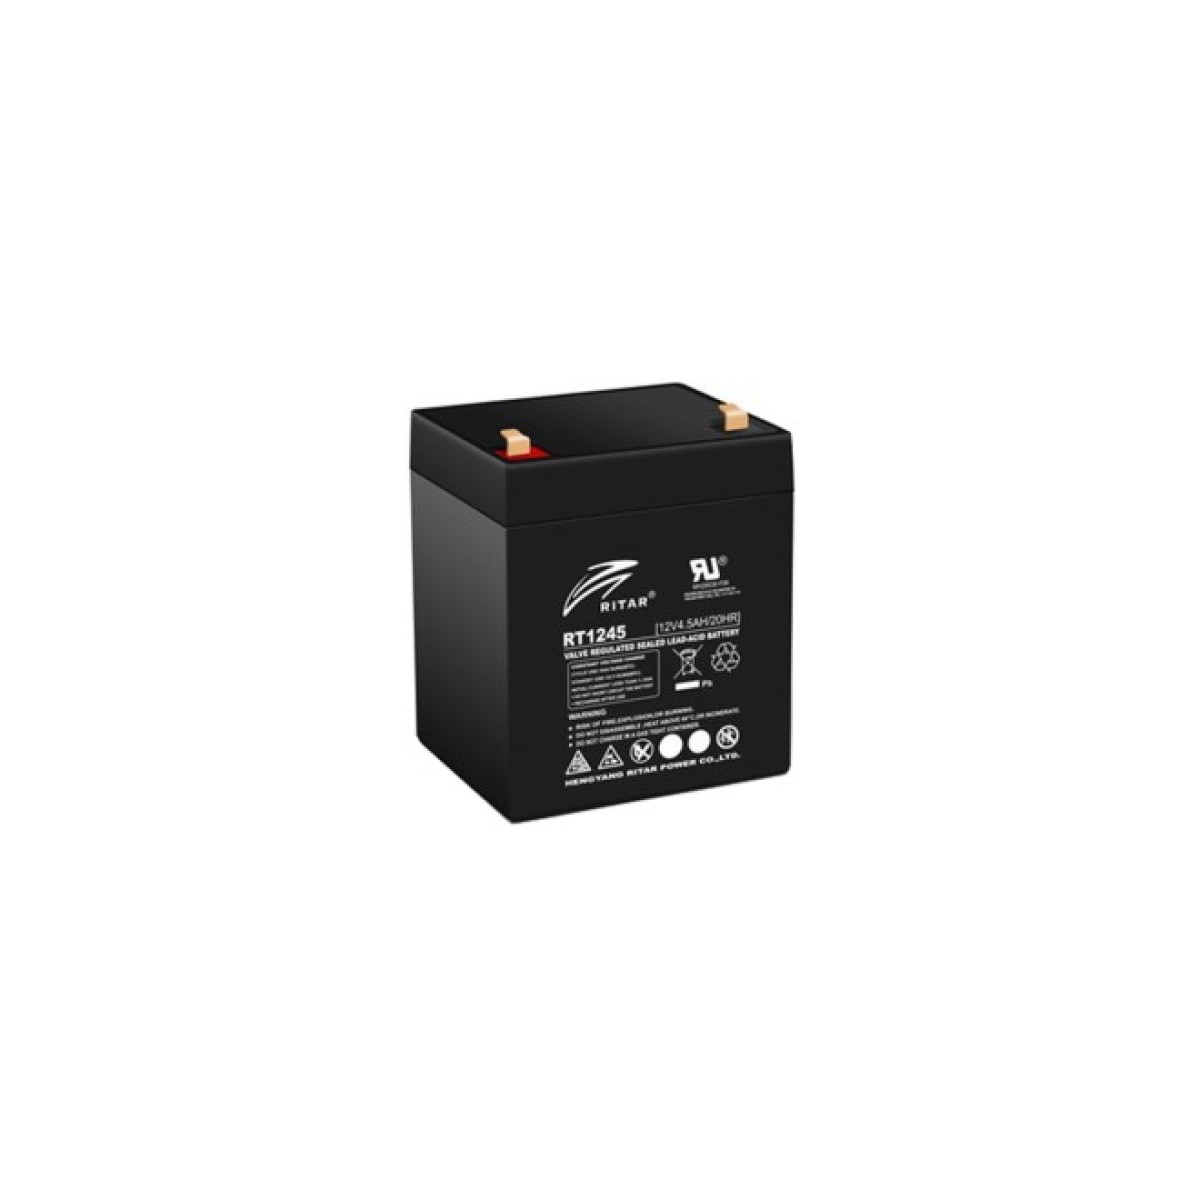 Батарея к ИБП Ritar AGM RT1245, 12V-4.5Ah, Black (RT1245B) 256_256.jpg